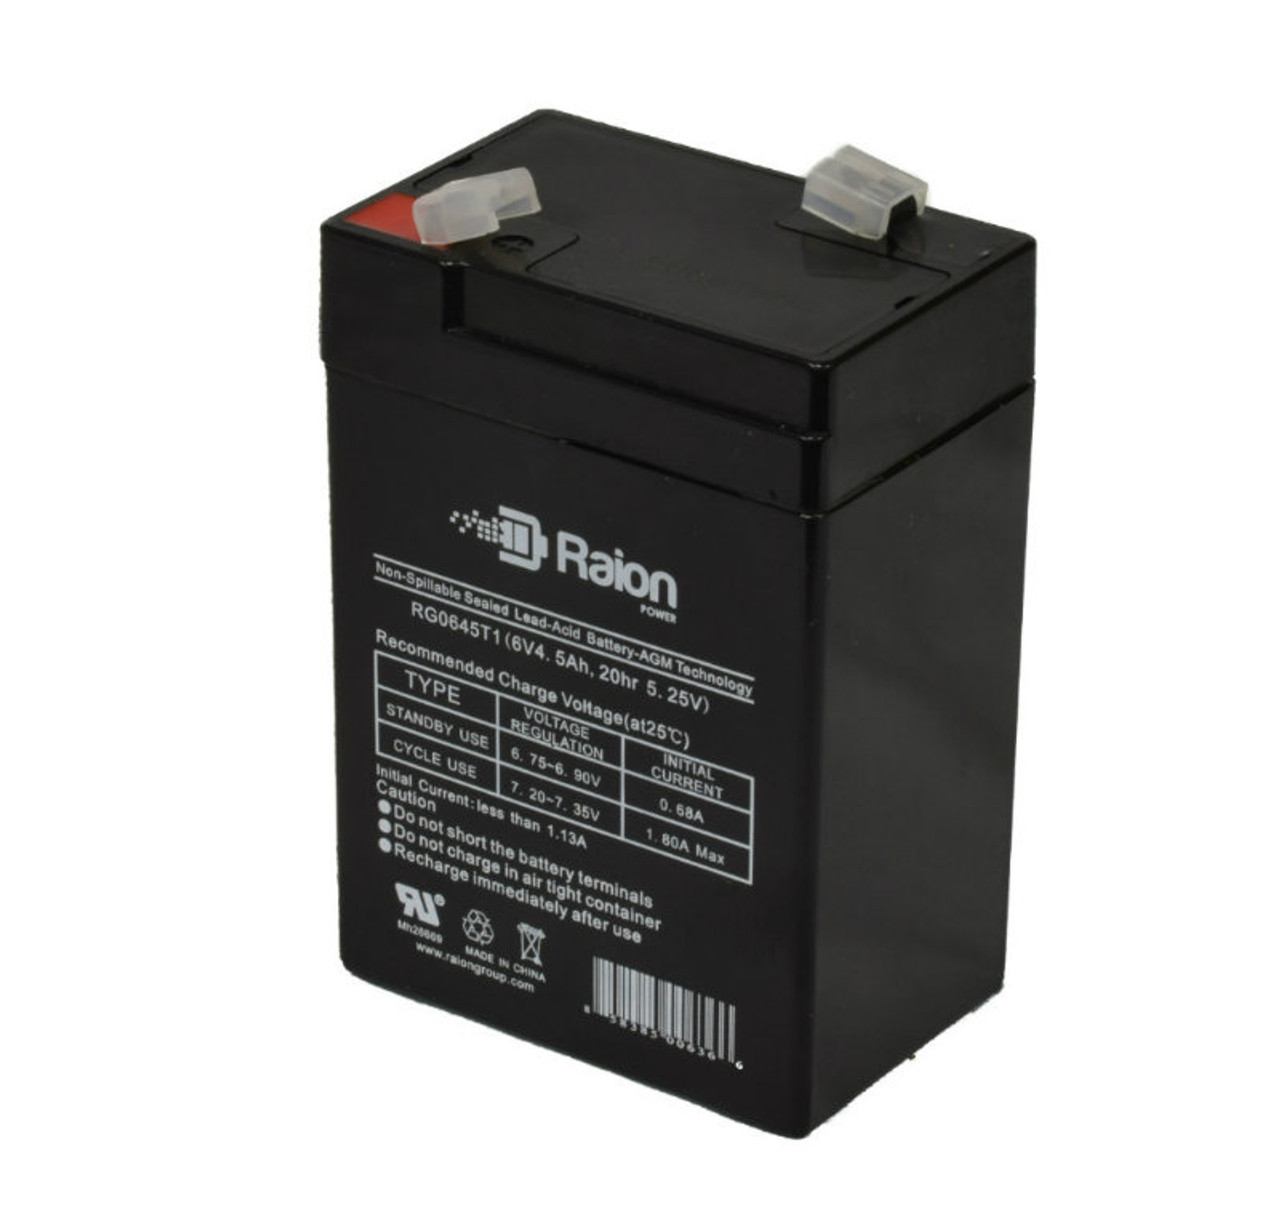 Raion Power RG0645T1 6V 4.5Ah Replacement Battery Cartridge for Razor 25159660 Jr. Lil Crazy